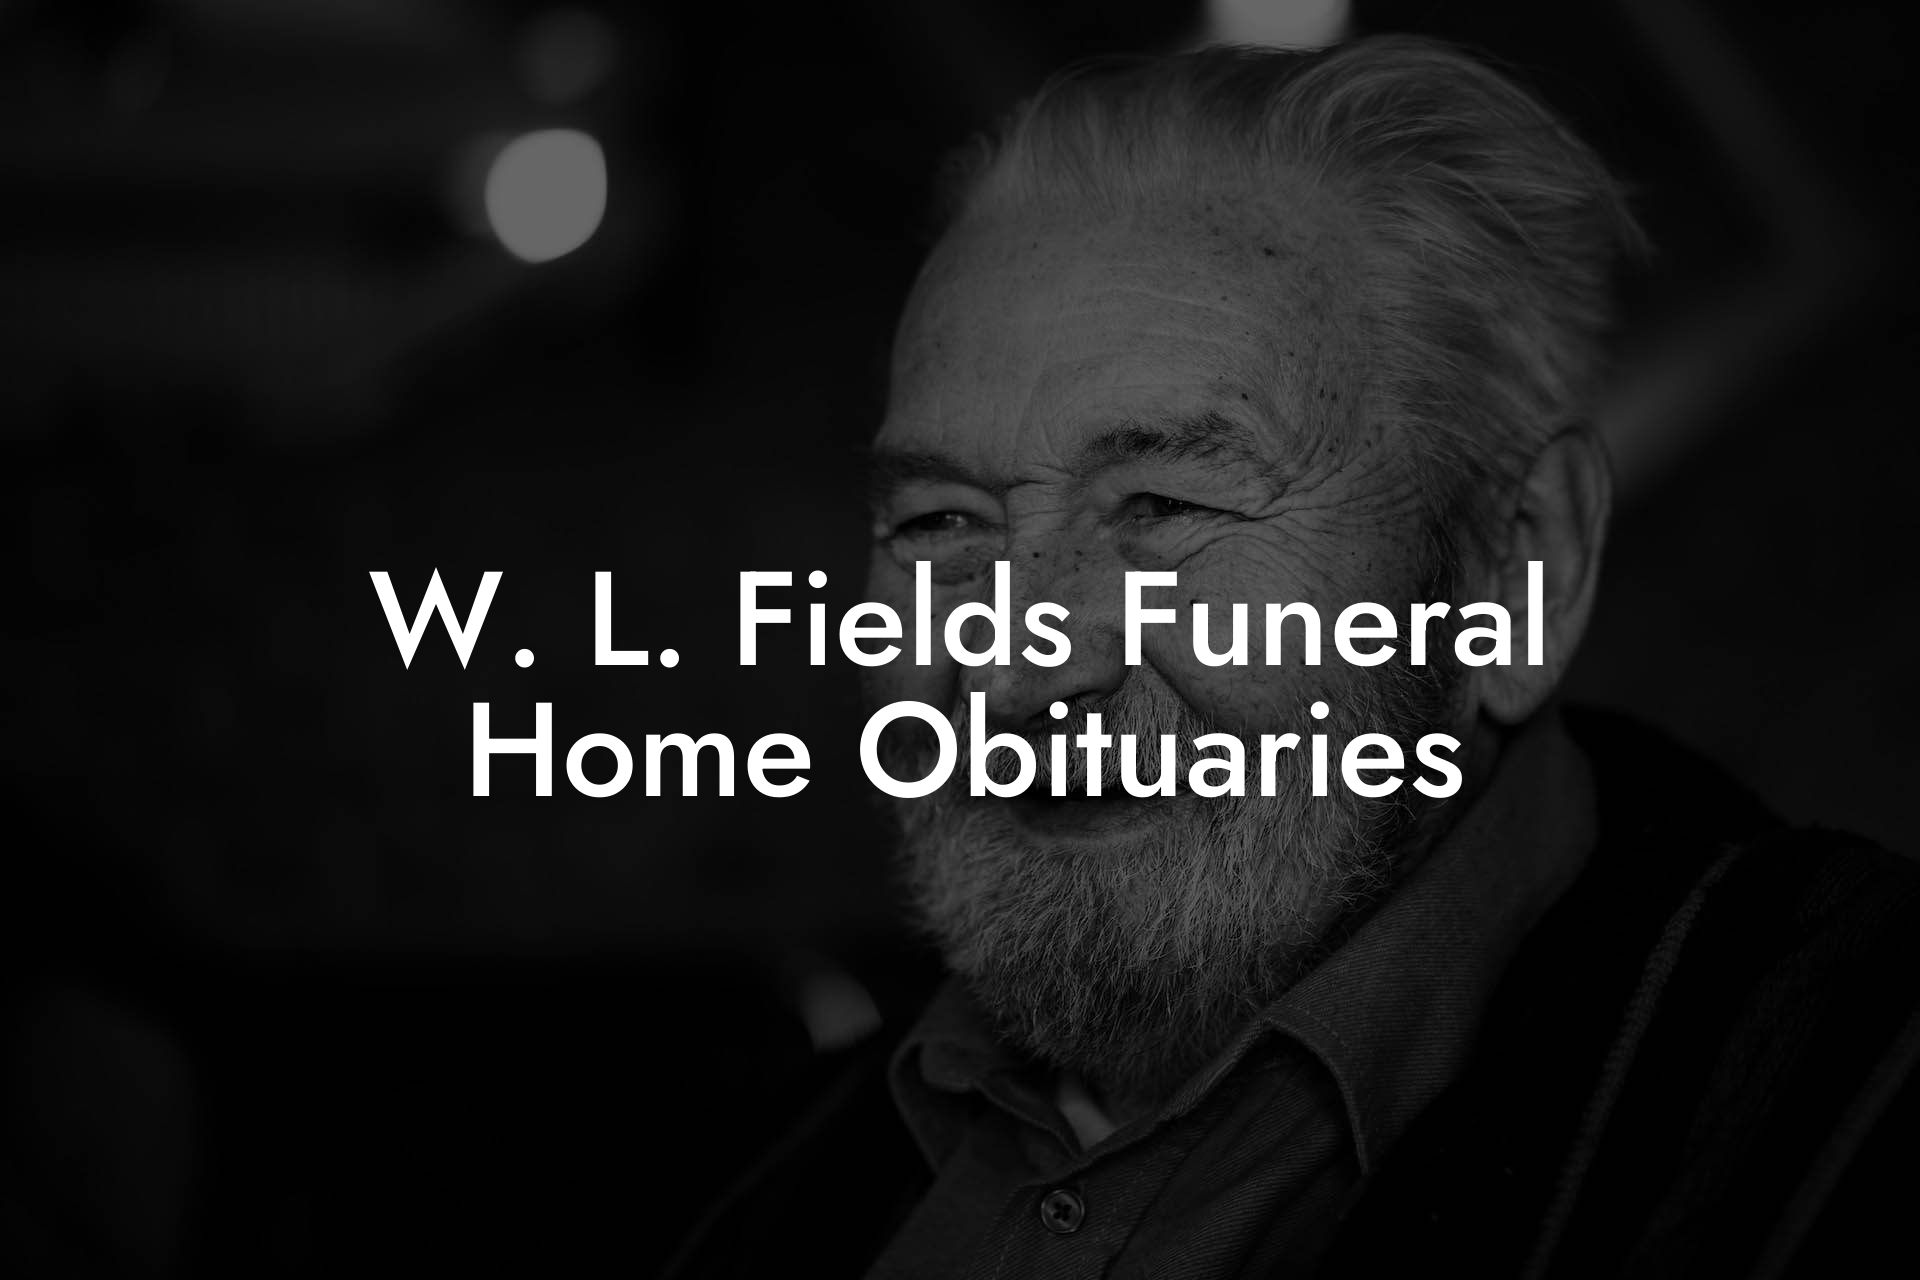 W. L. Fields Funeral Home Obituaries